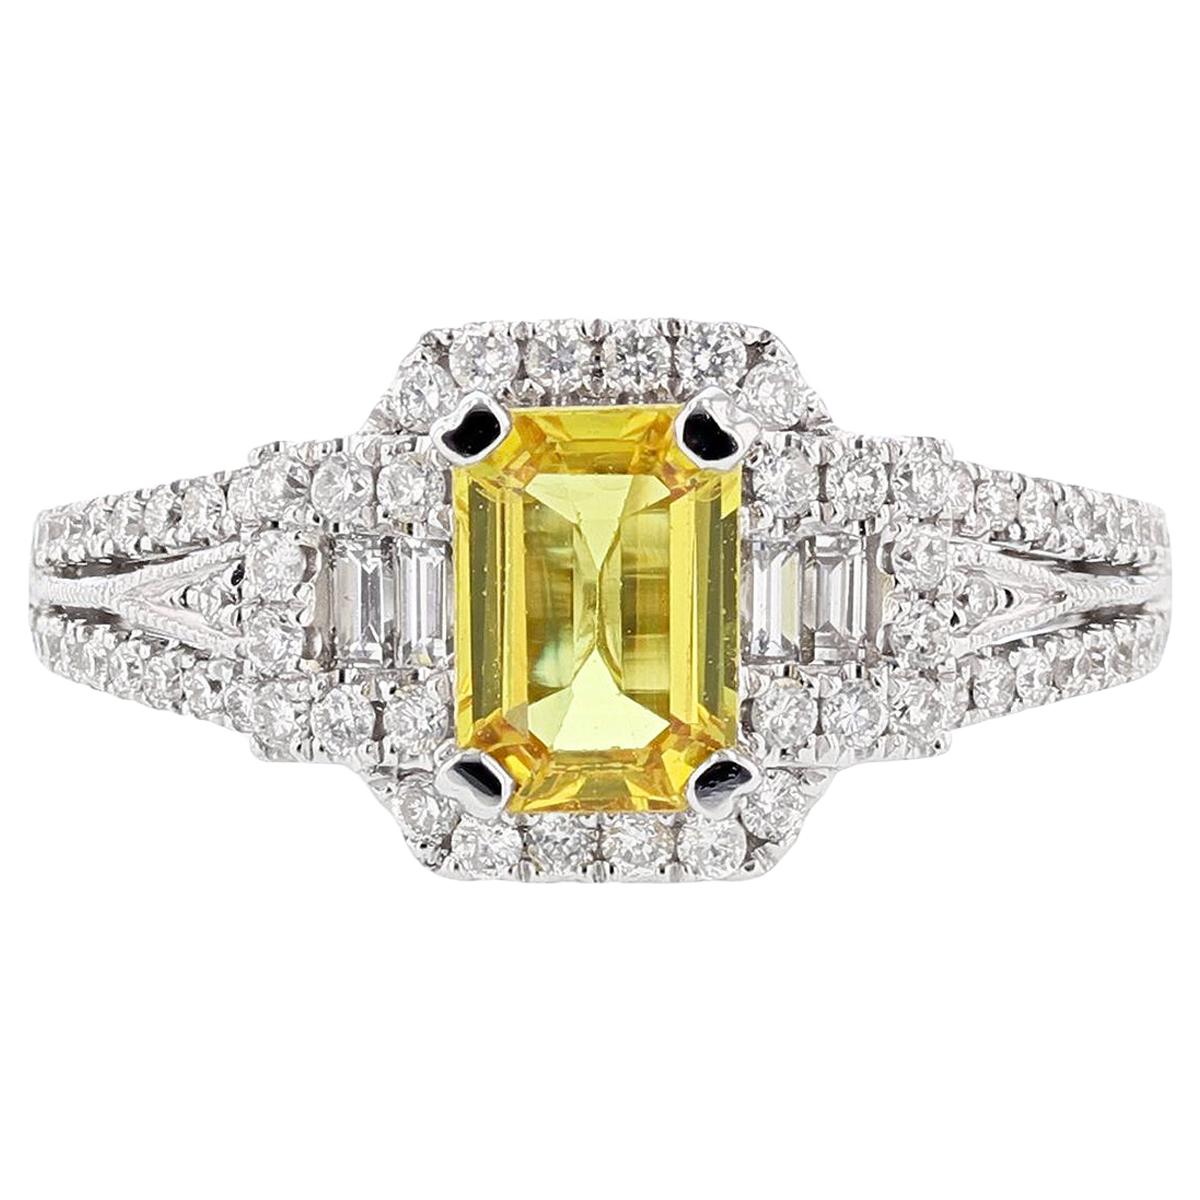 18 Karat White Gold 1.07 Carat Emerald Cut Yellow Sapphire Diamond Ring